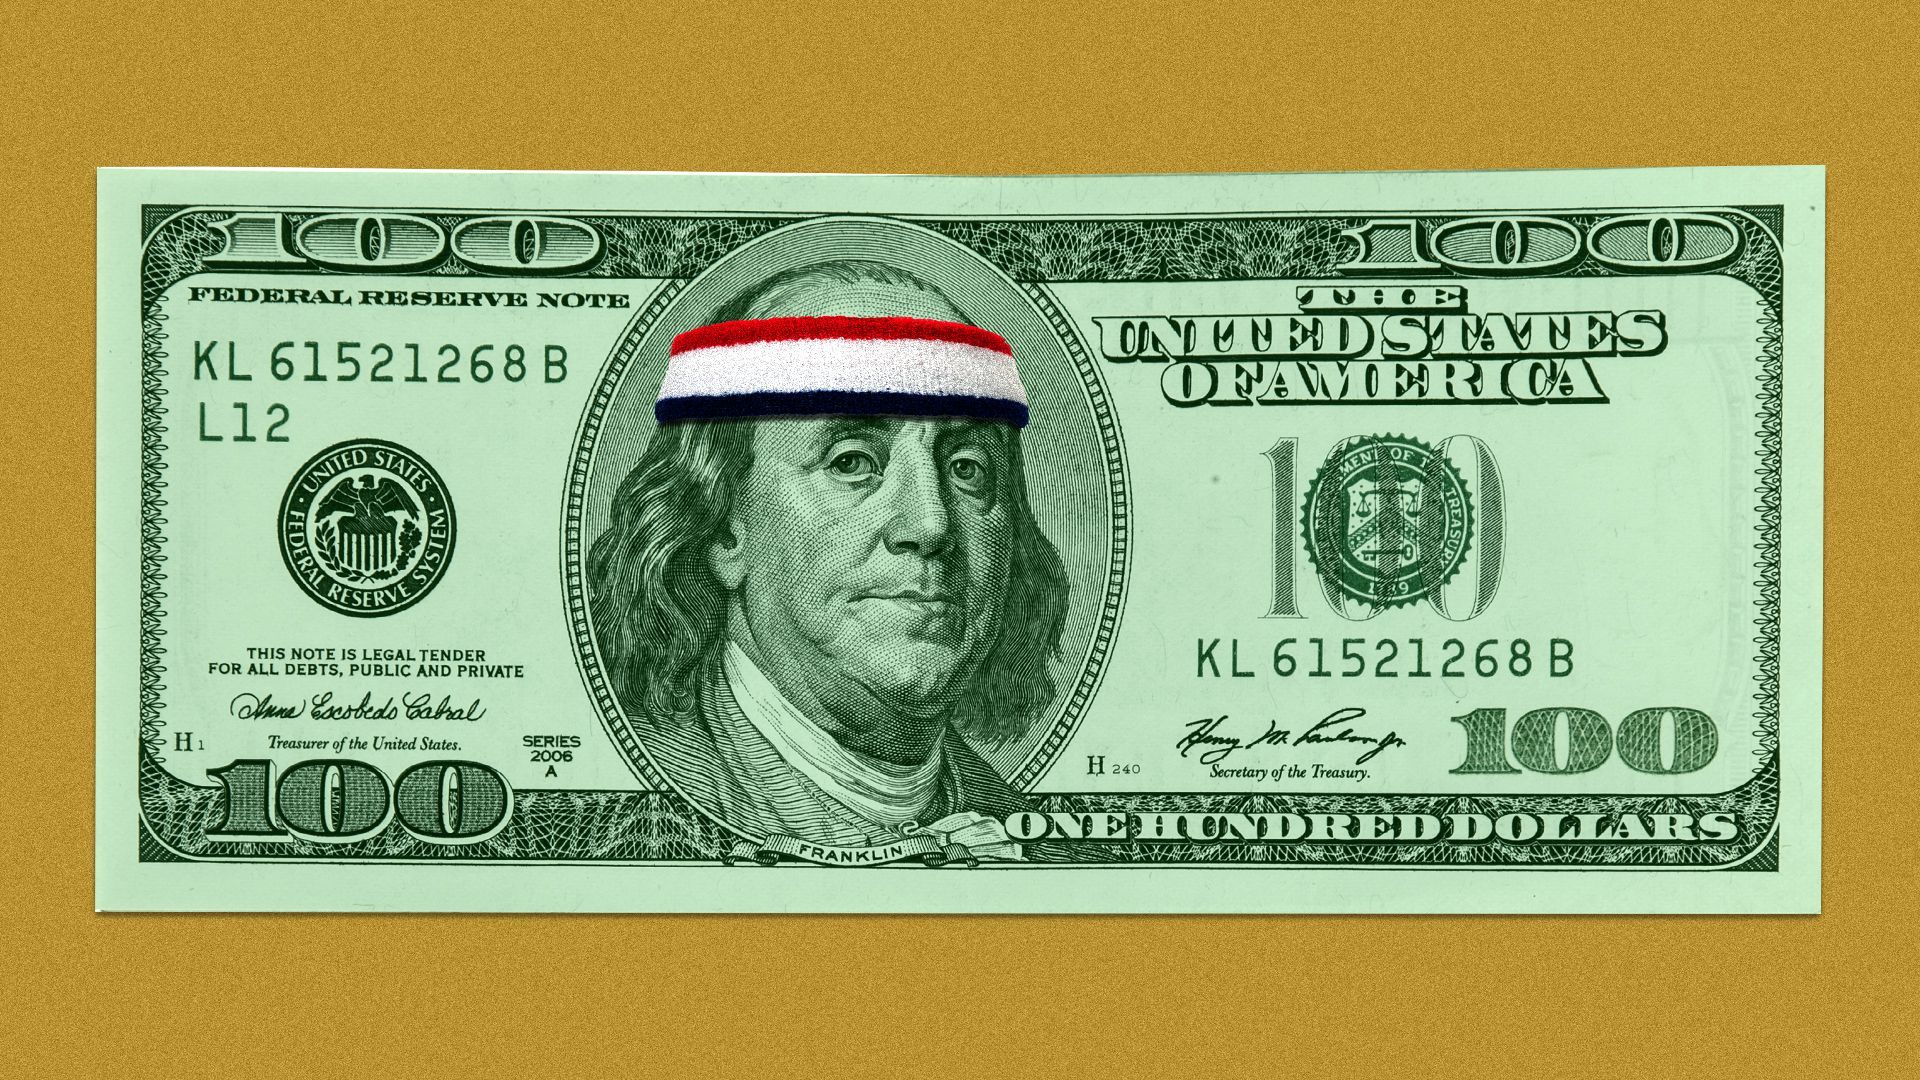 Illustration of Ben Franklin on $100 bill wearing a sweatband.